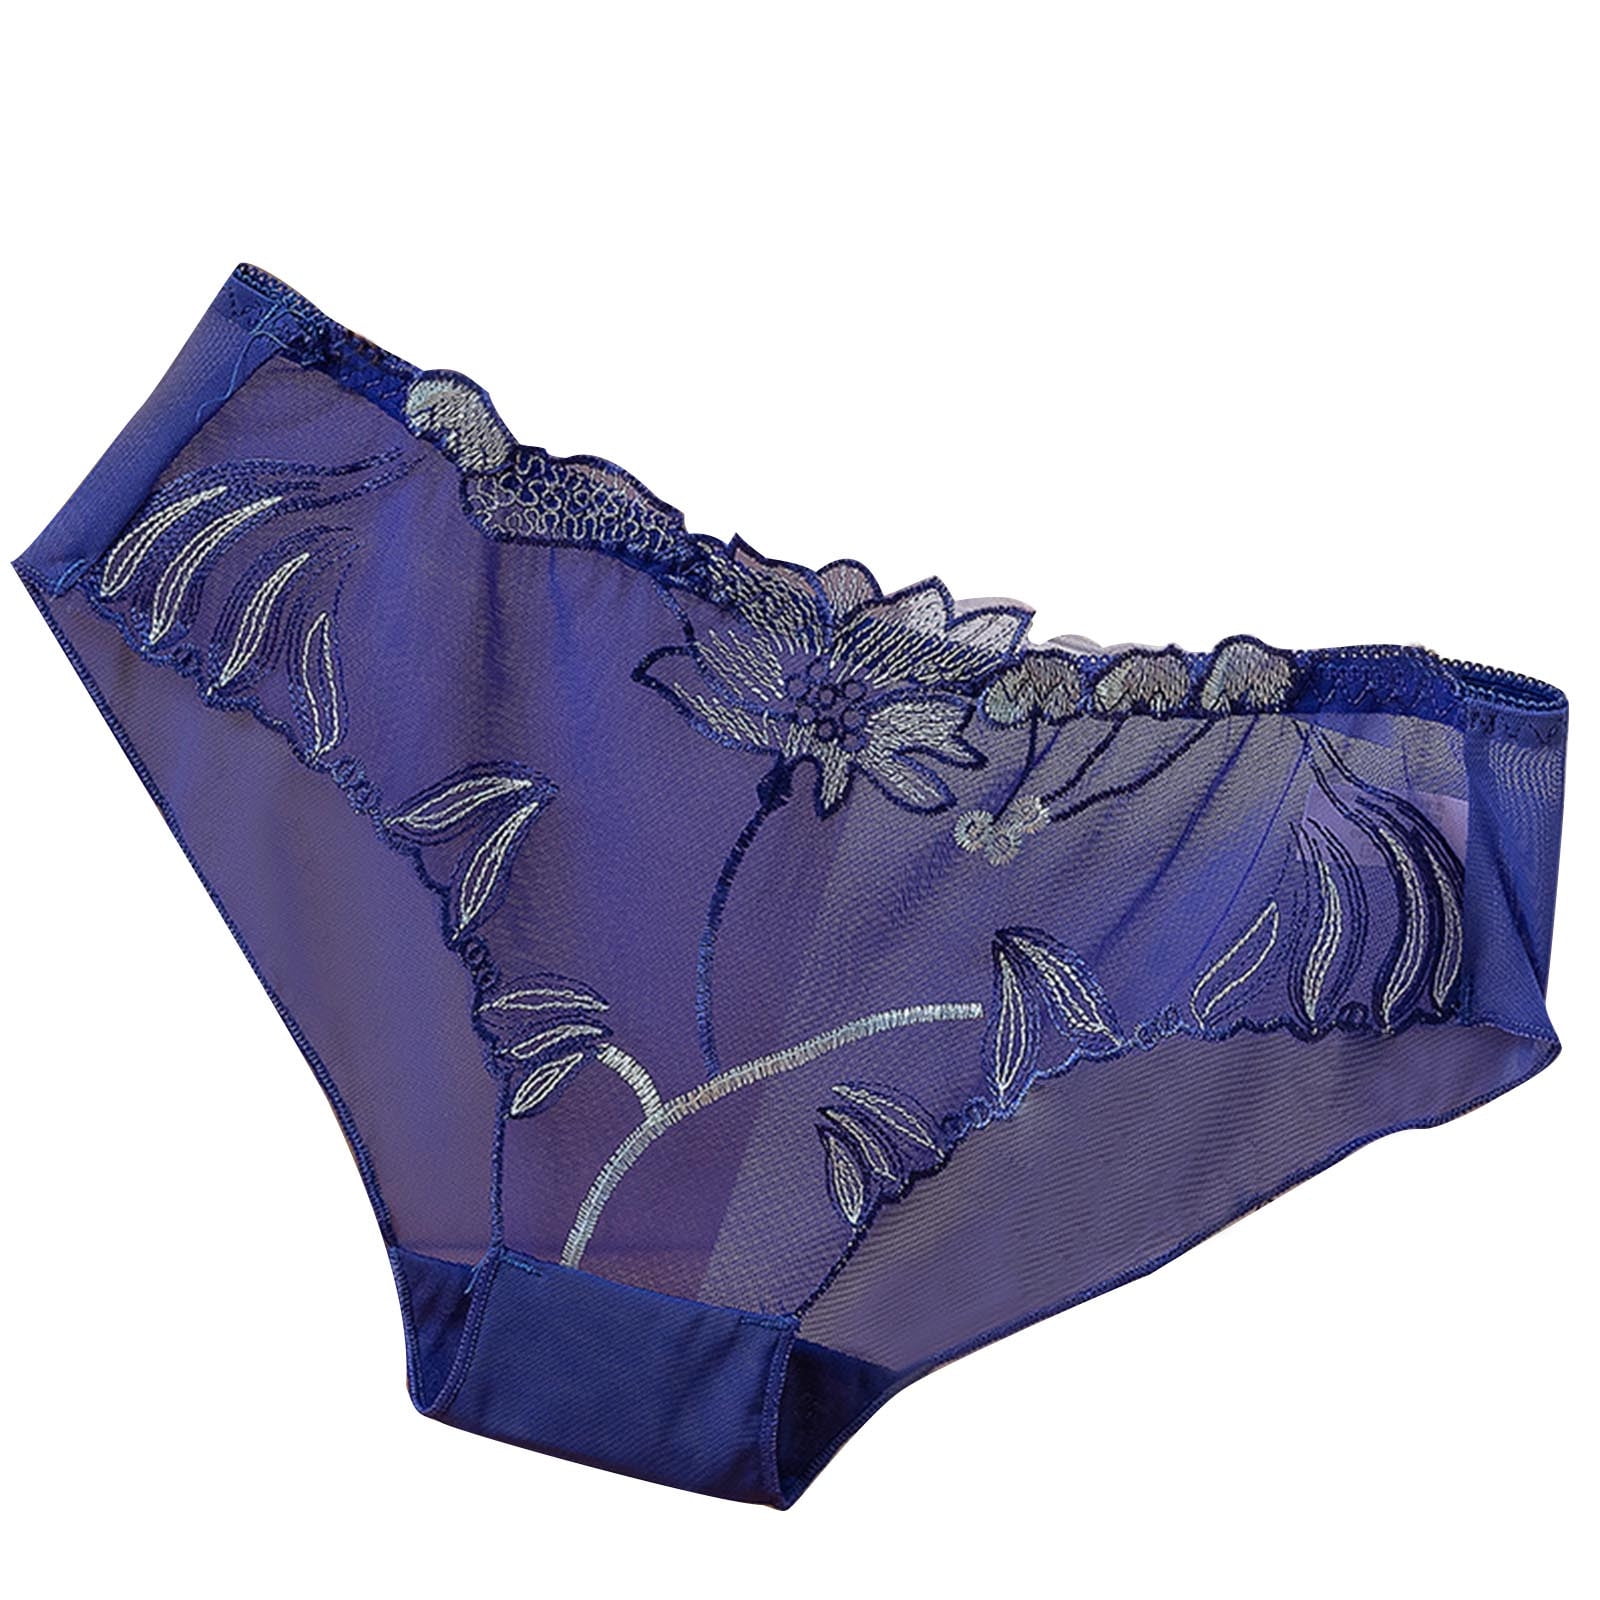 N-Gal Panties Floral Lace Edge Mid Waist Underwear Lingerie Brief Panty,  Model Name/Number: NTDT19, 1 Piece at Rs 95/piece in Noida